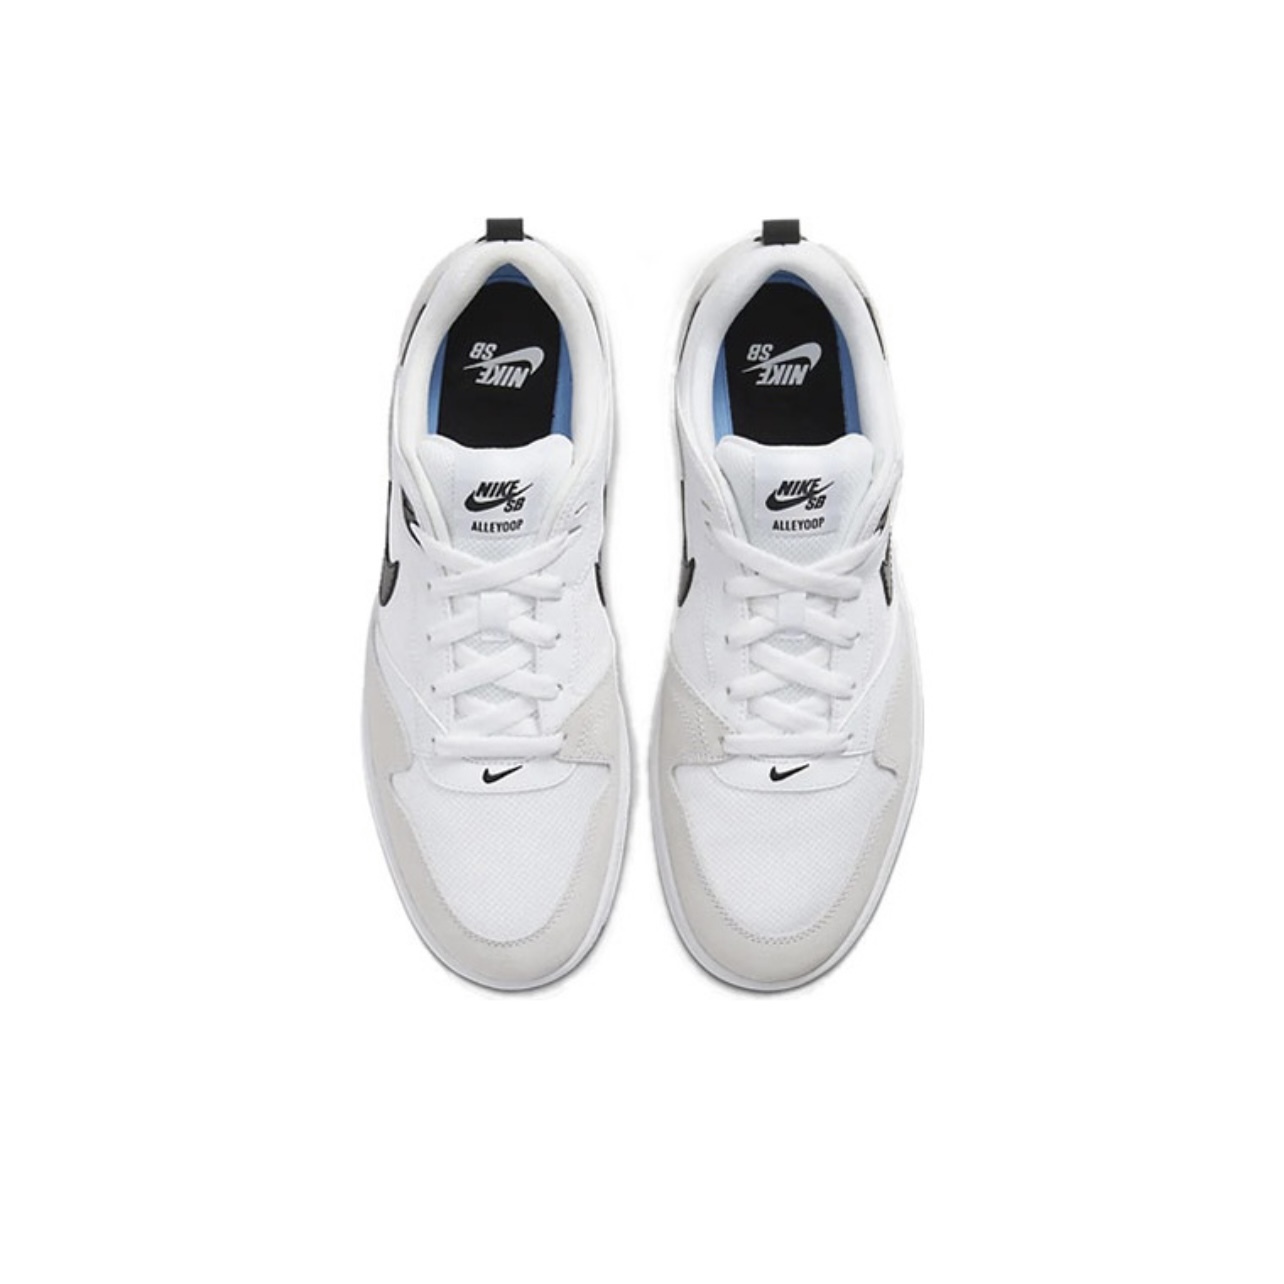 Кеды Nike SB Alleyoop White/Black-White